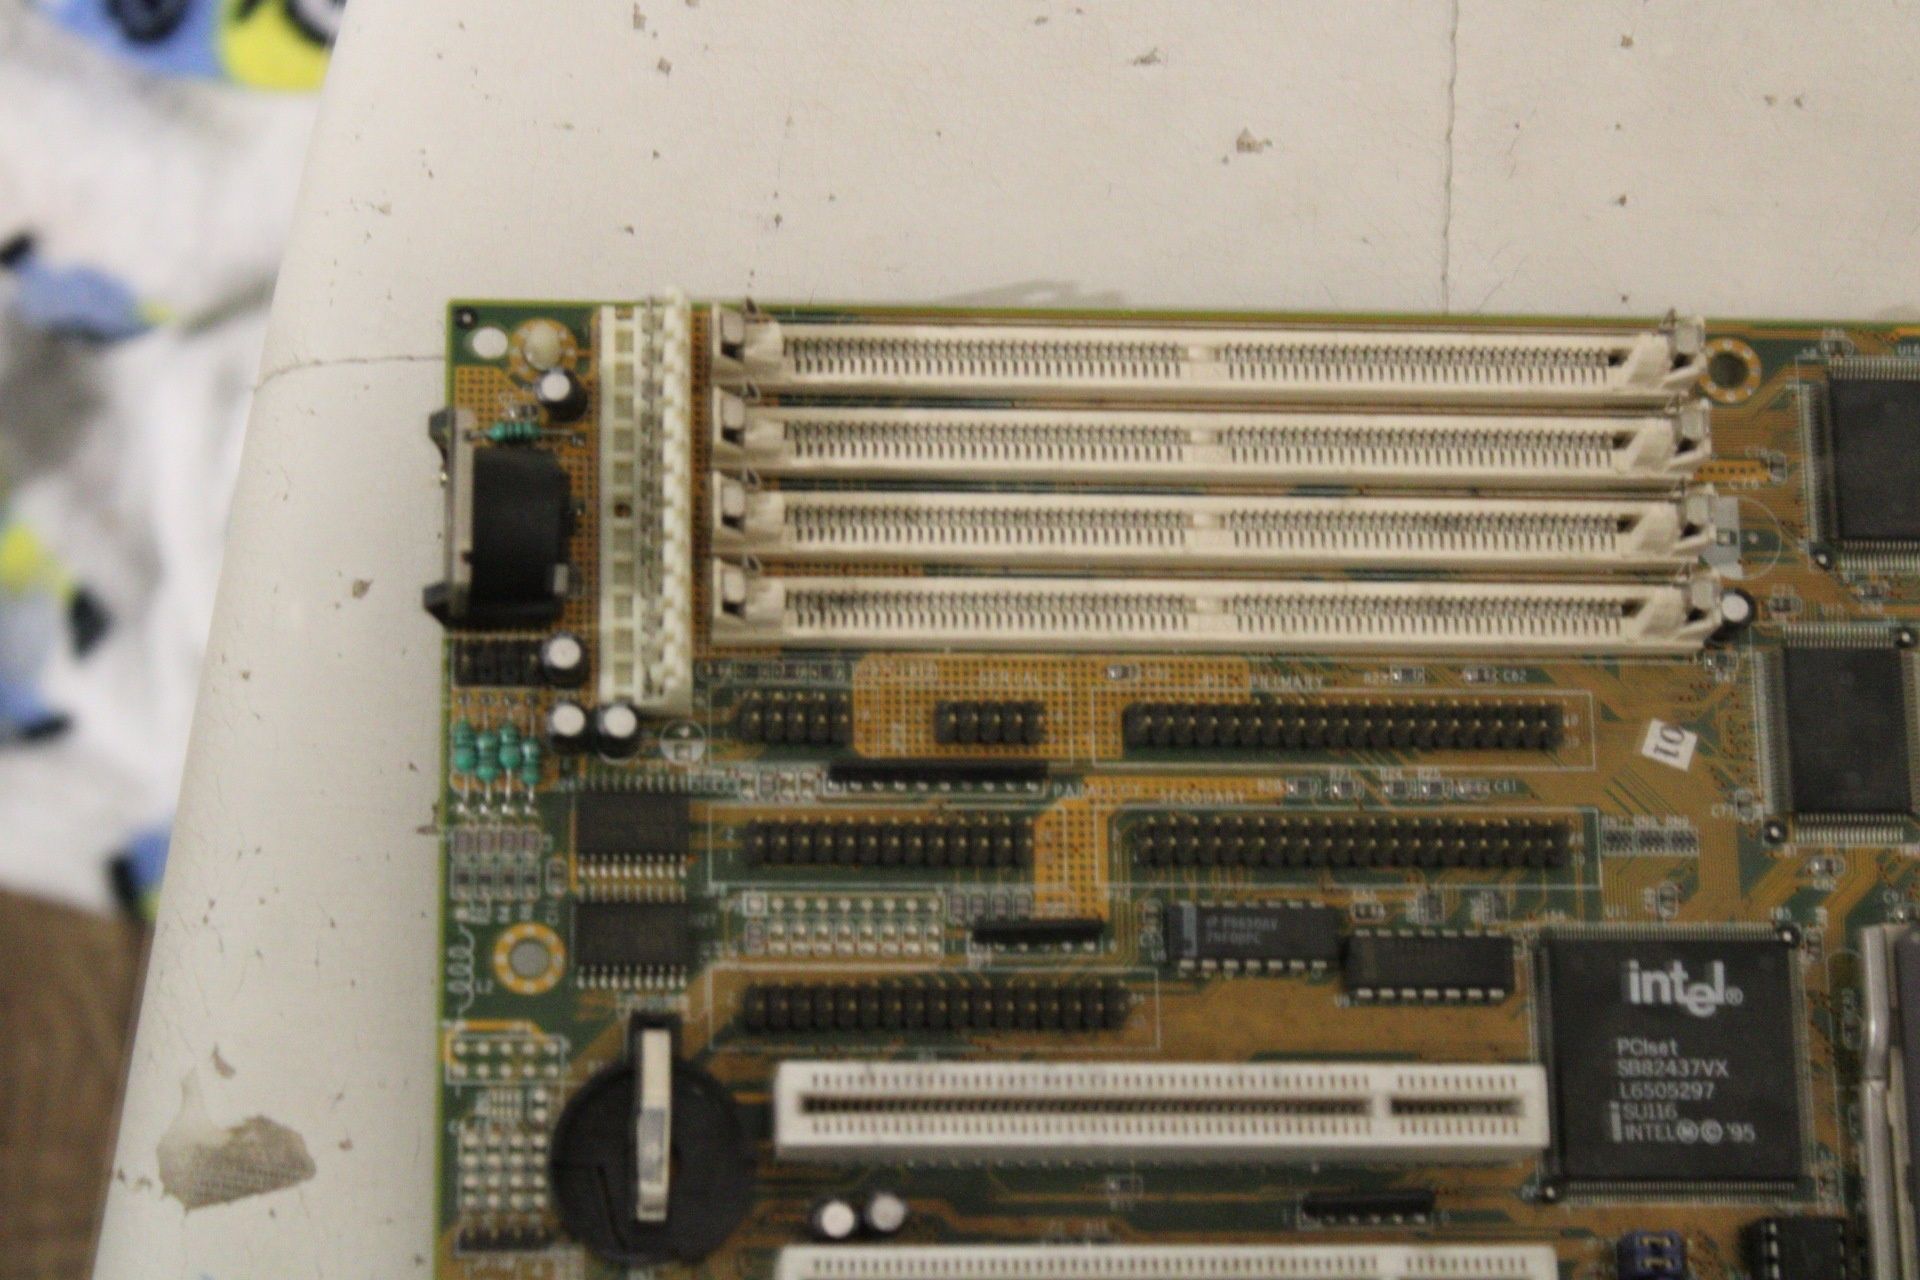 Retro płyta socket 7 proces Intel Pentium